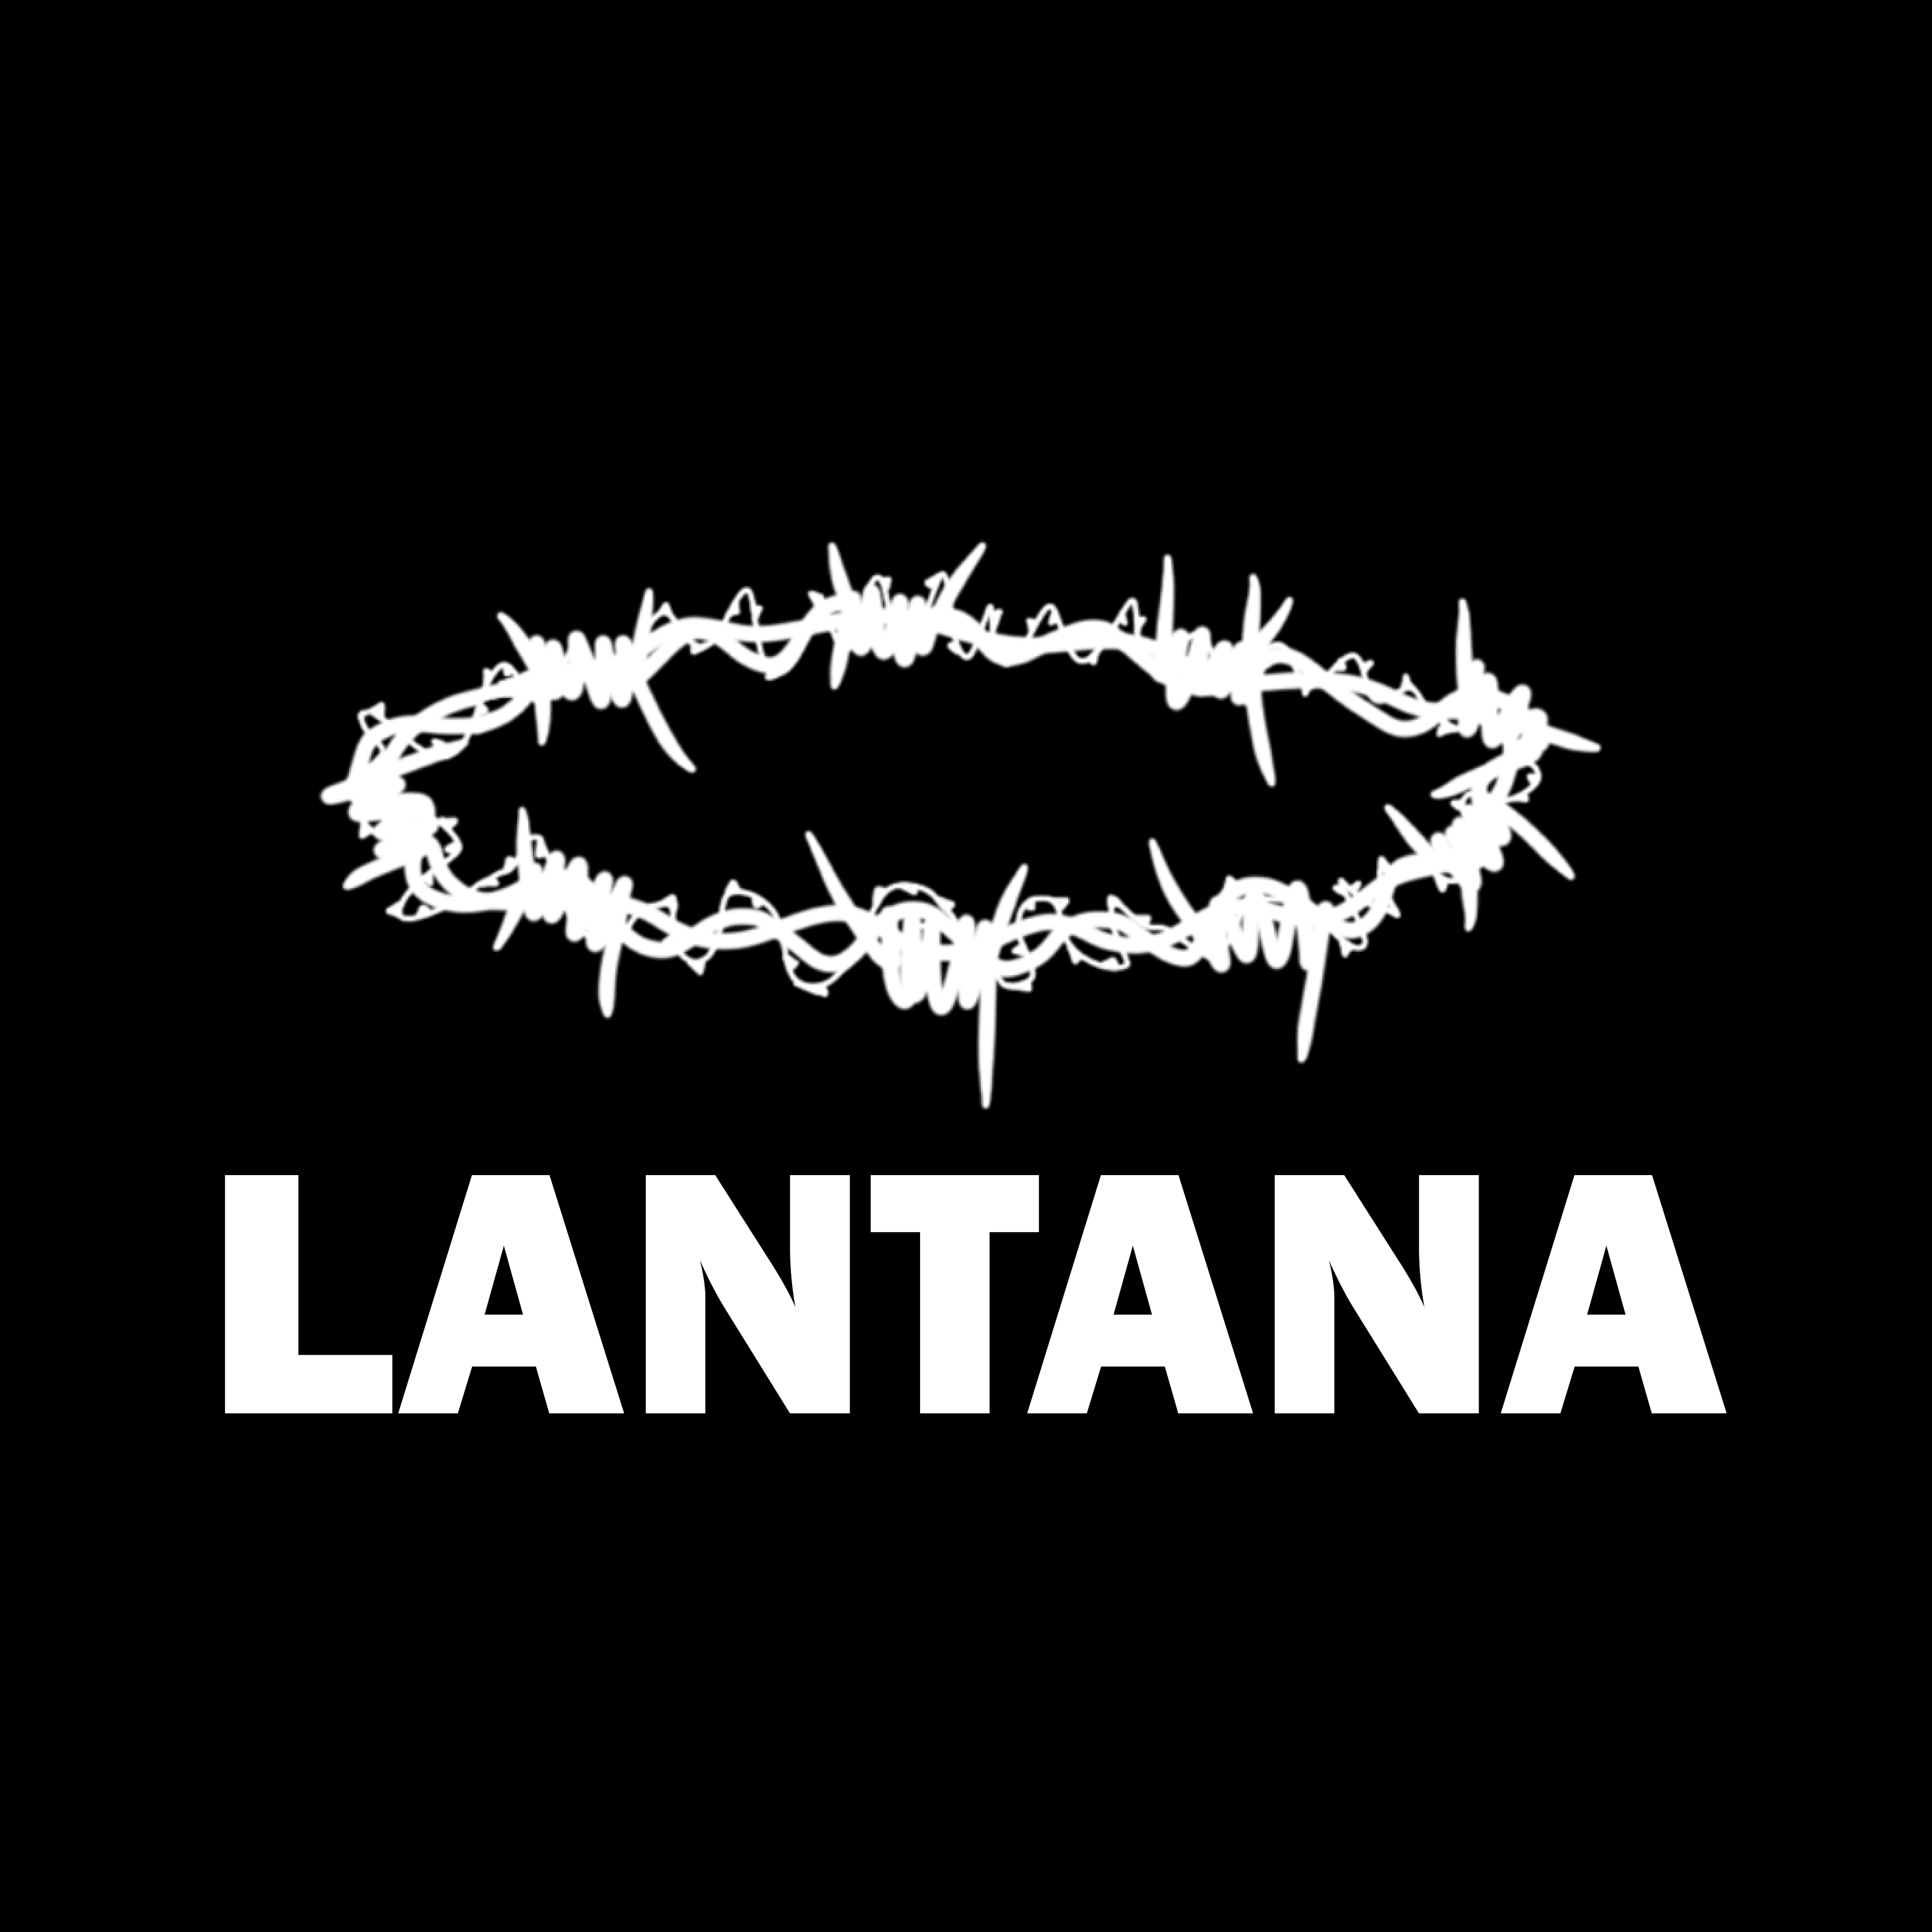 LANTANASpace